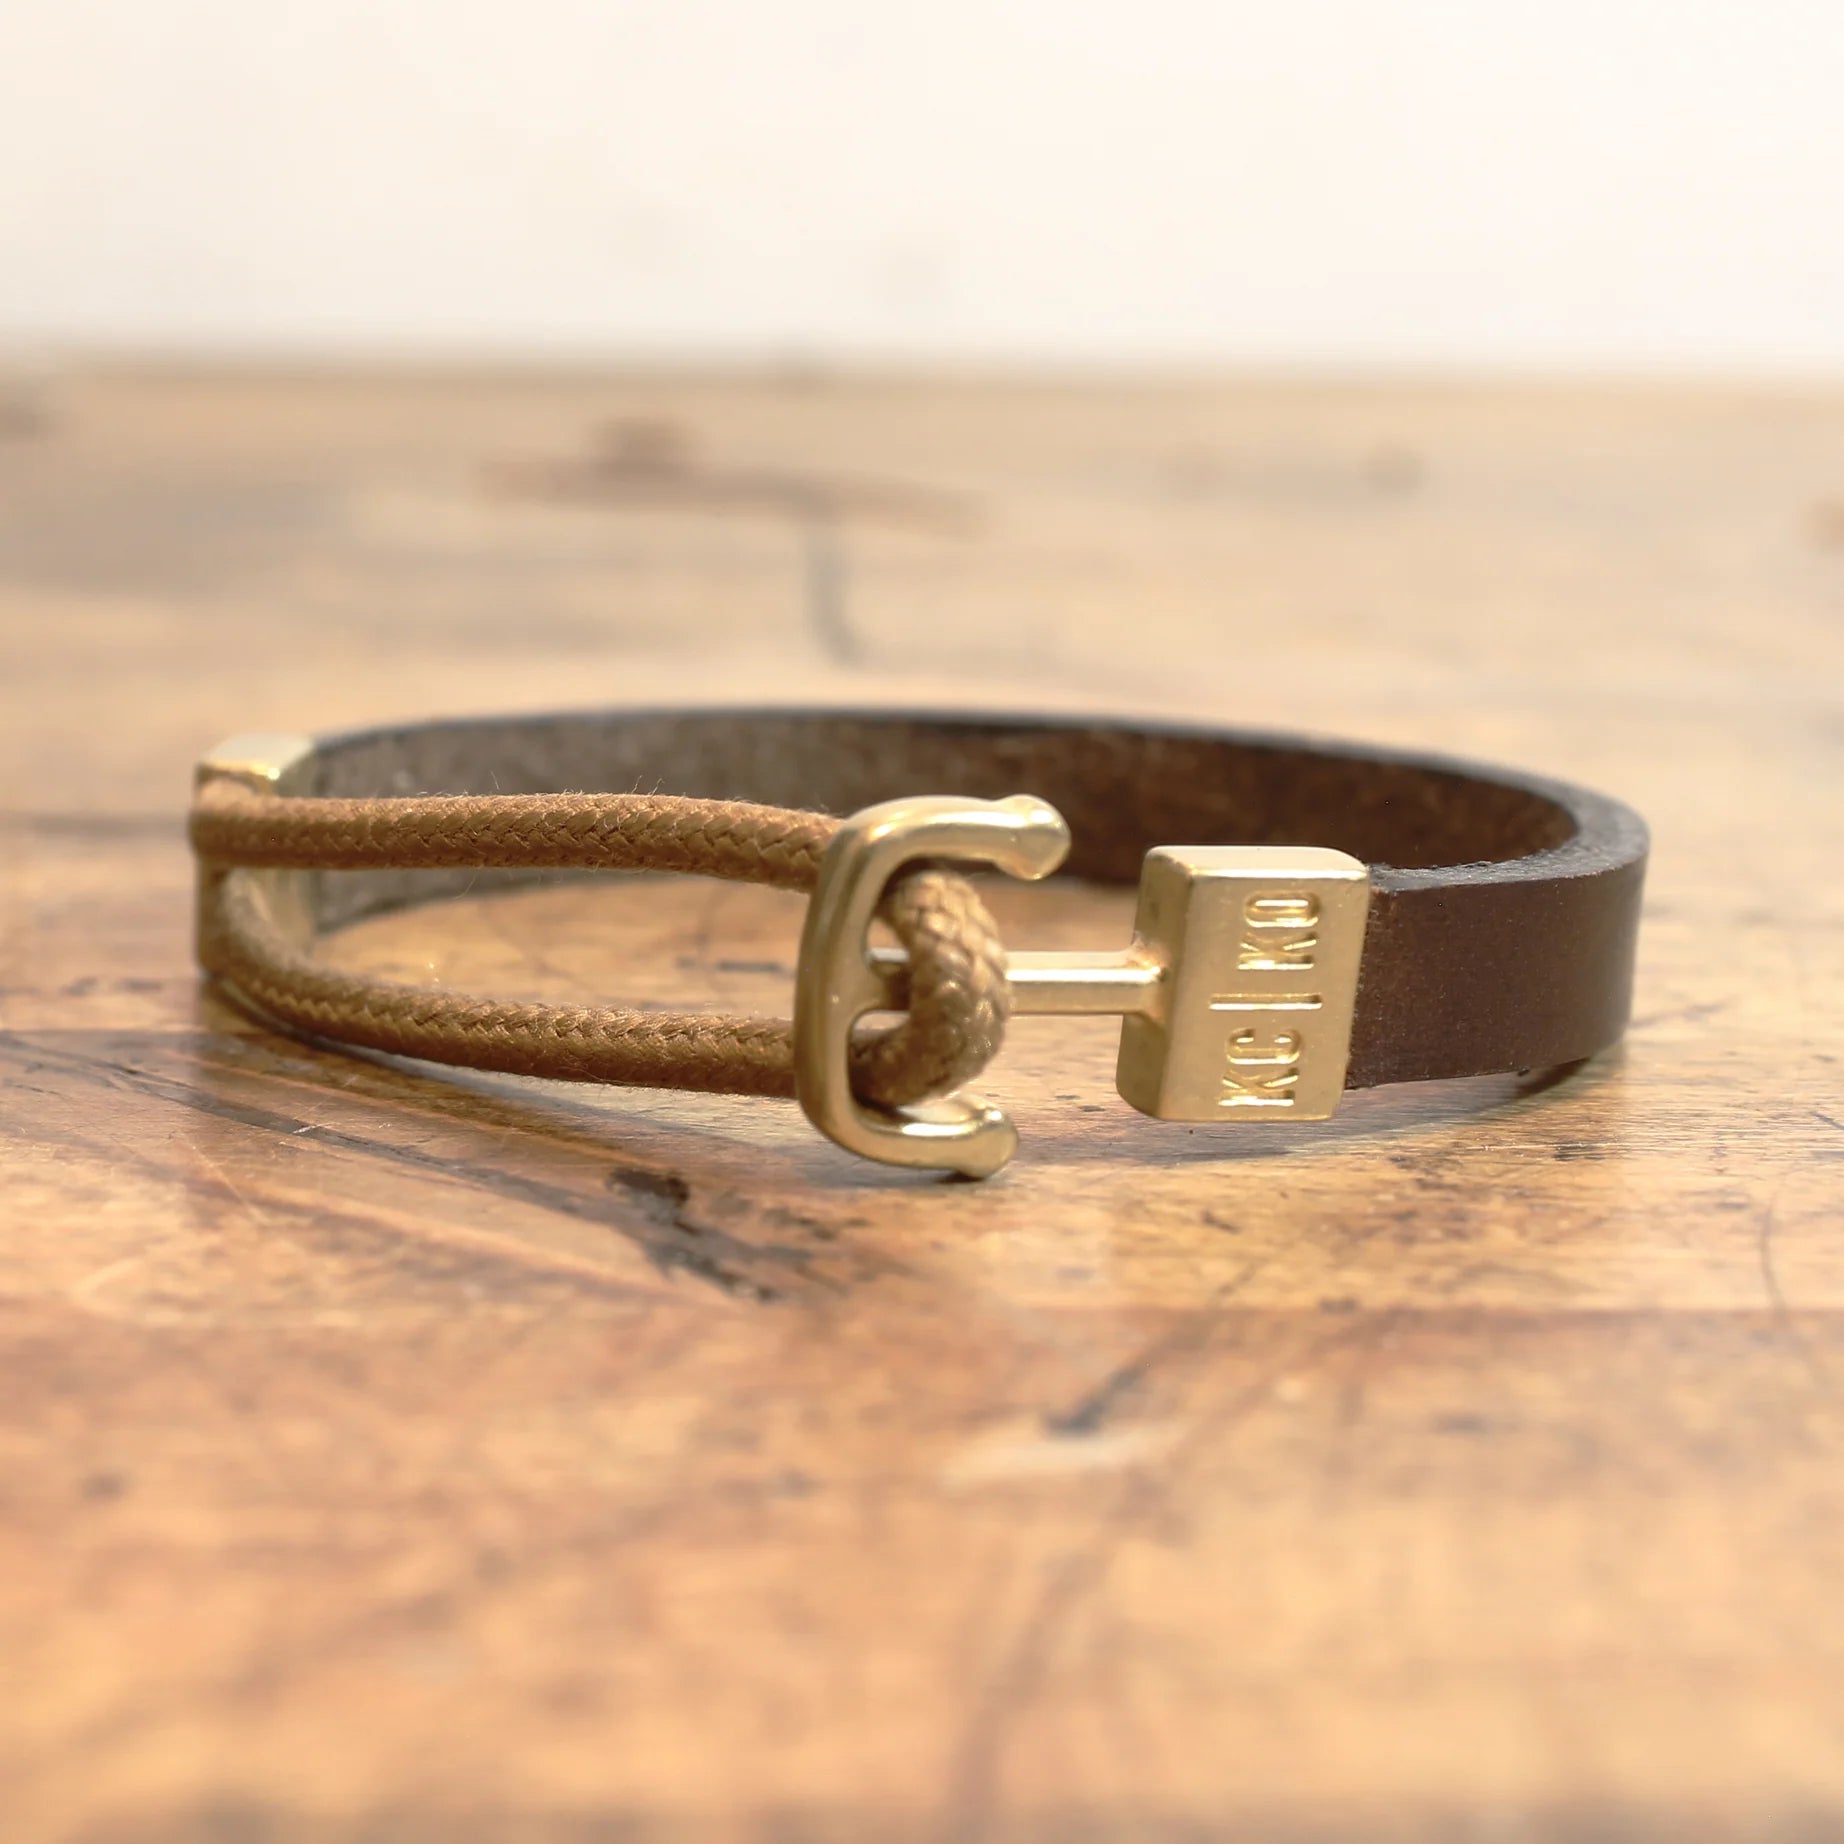 Single Wrap Leather & Cord Bracelet: Camel